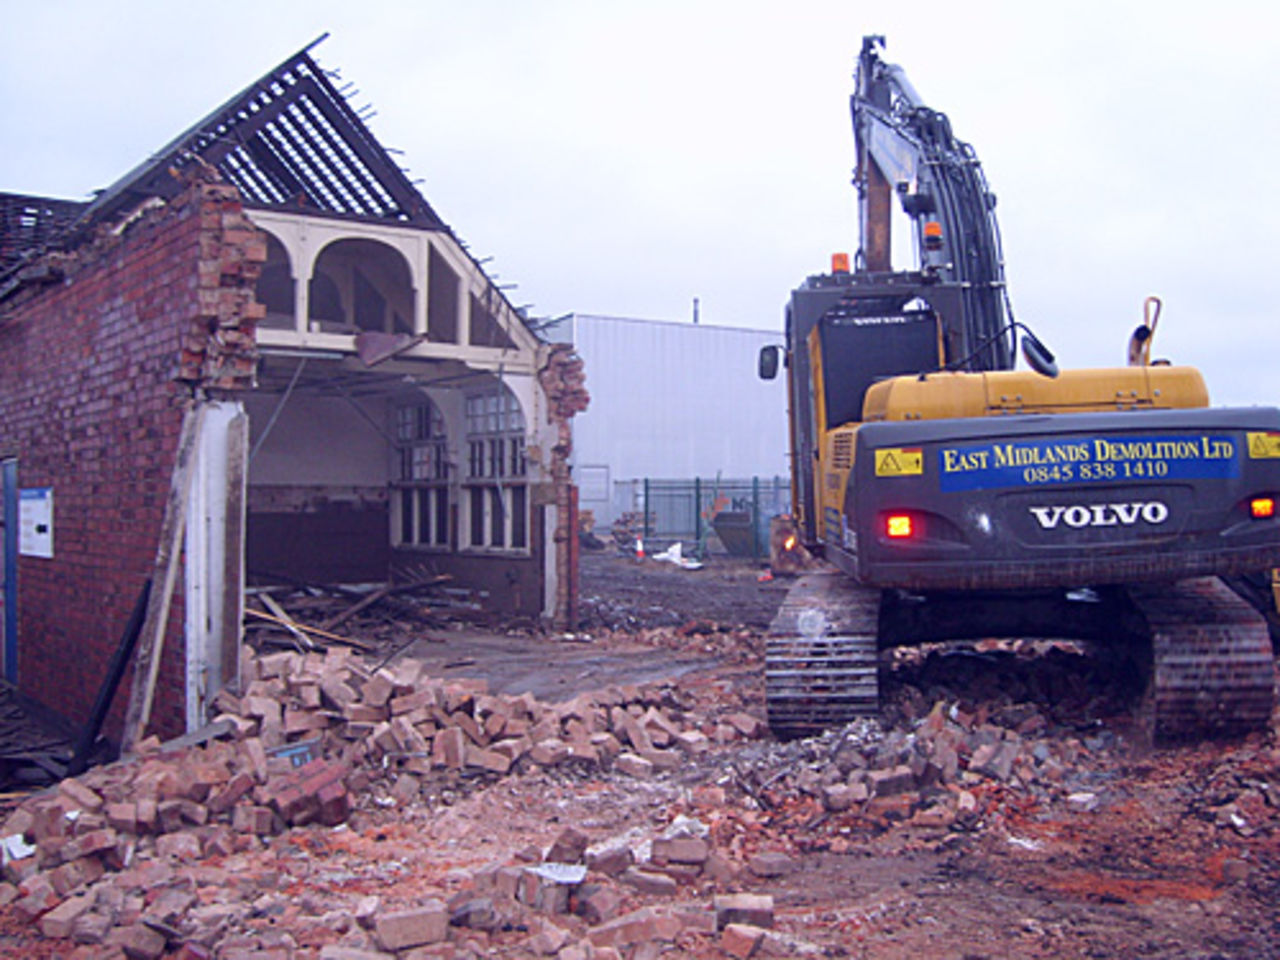 Demolition work begins at Derbyshire's Racecourse Ground, January 15, 2009